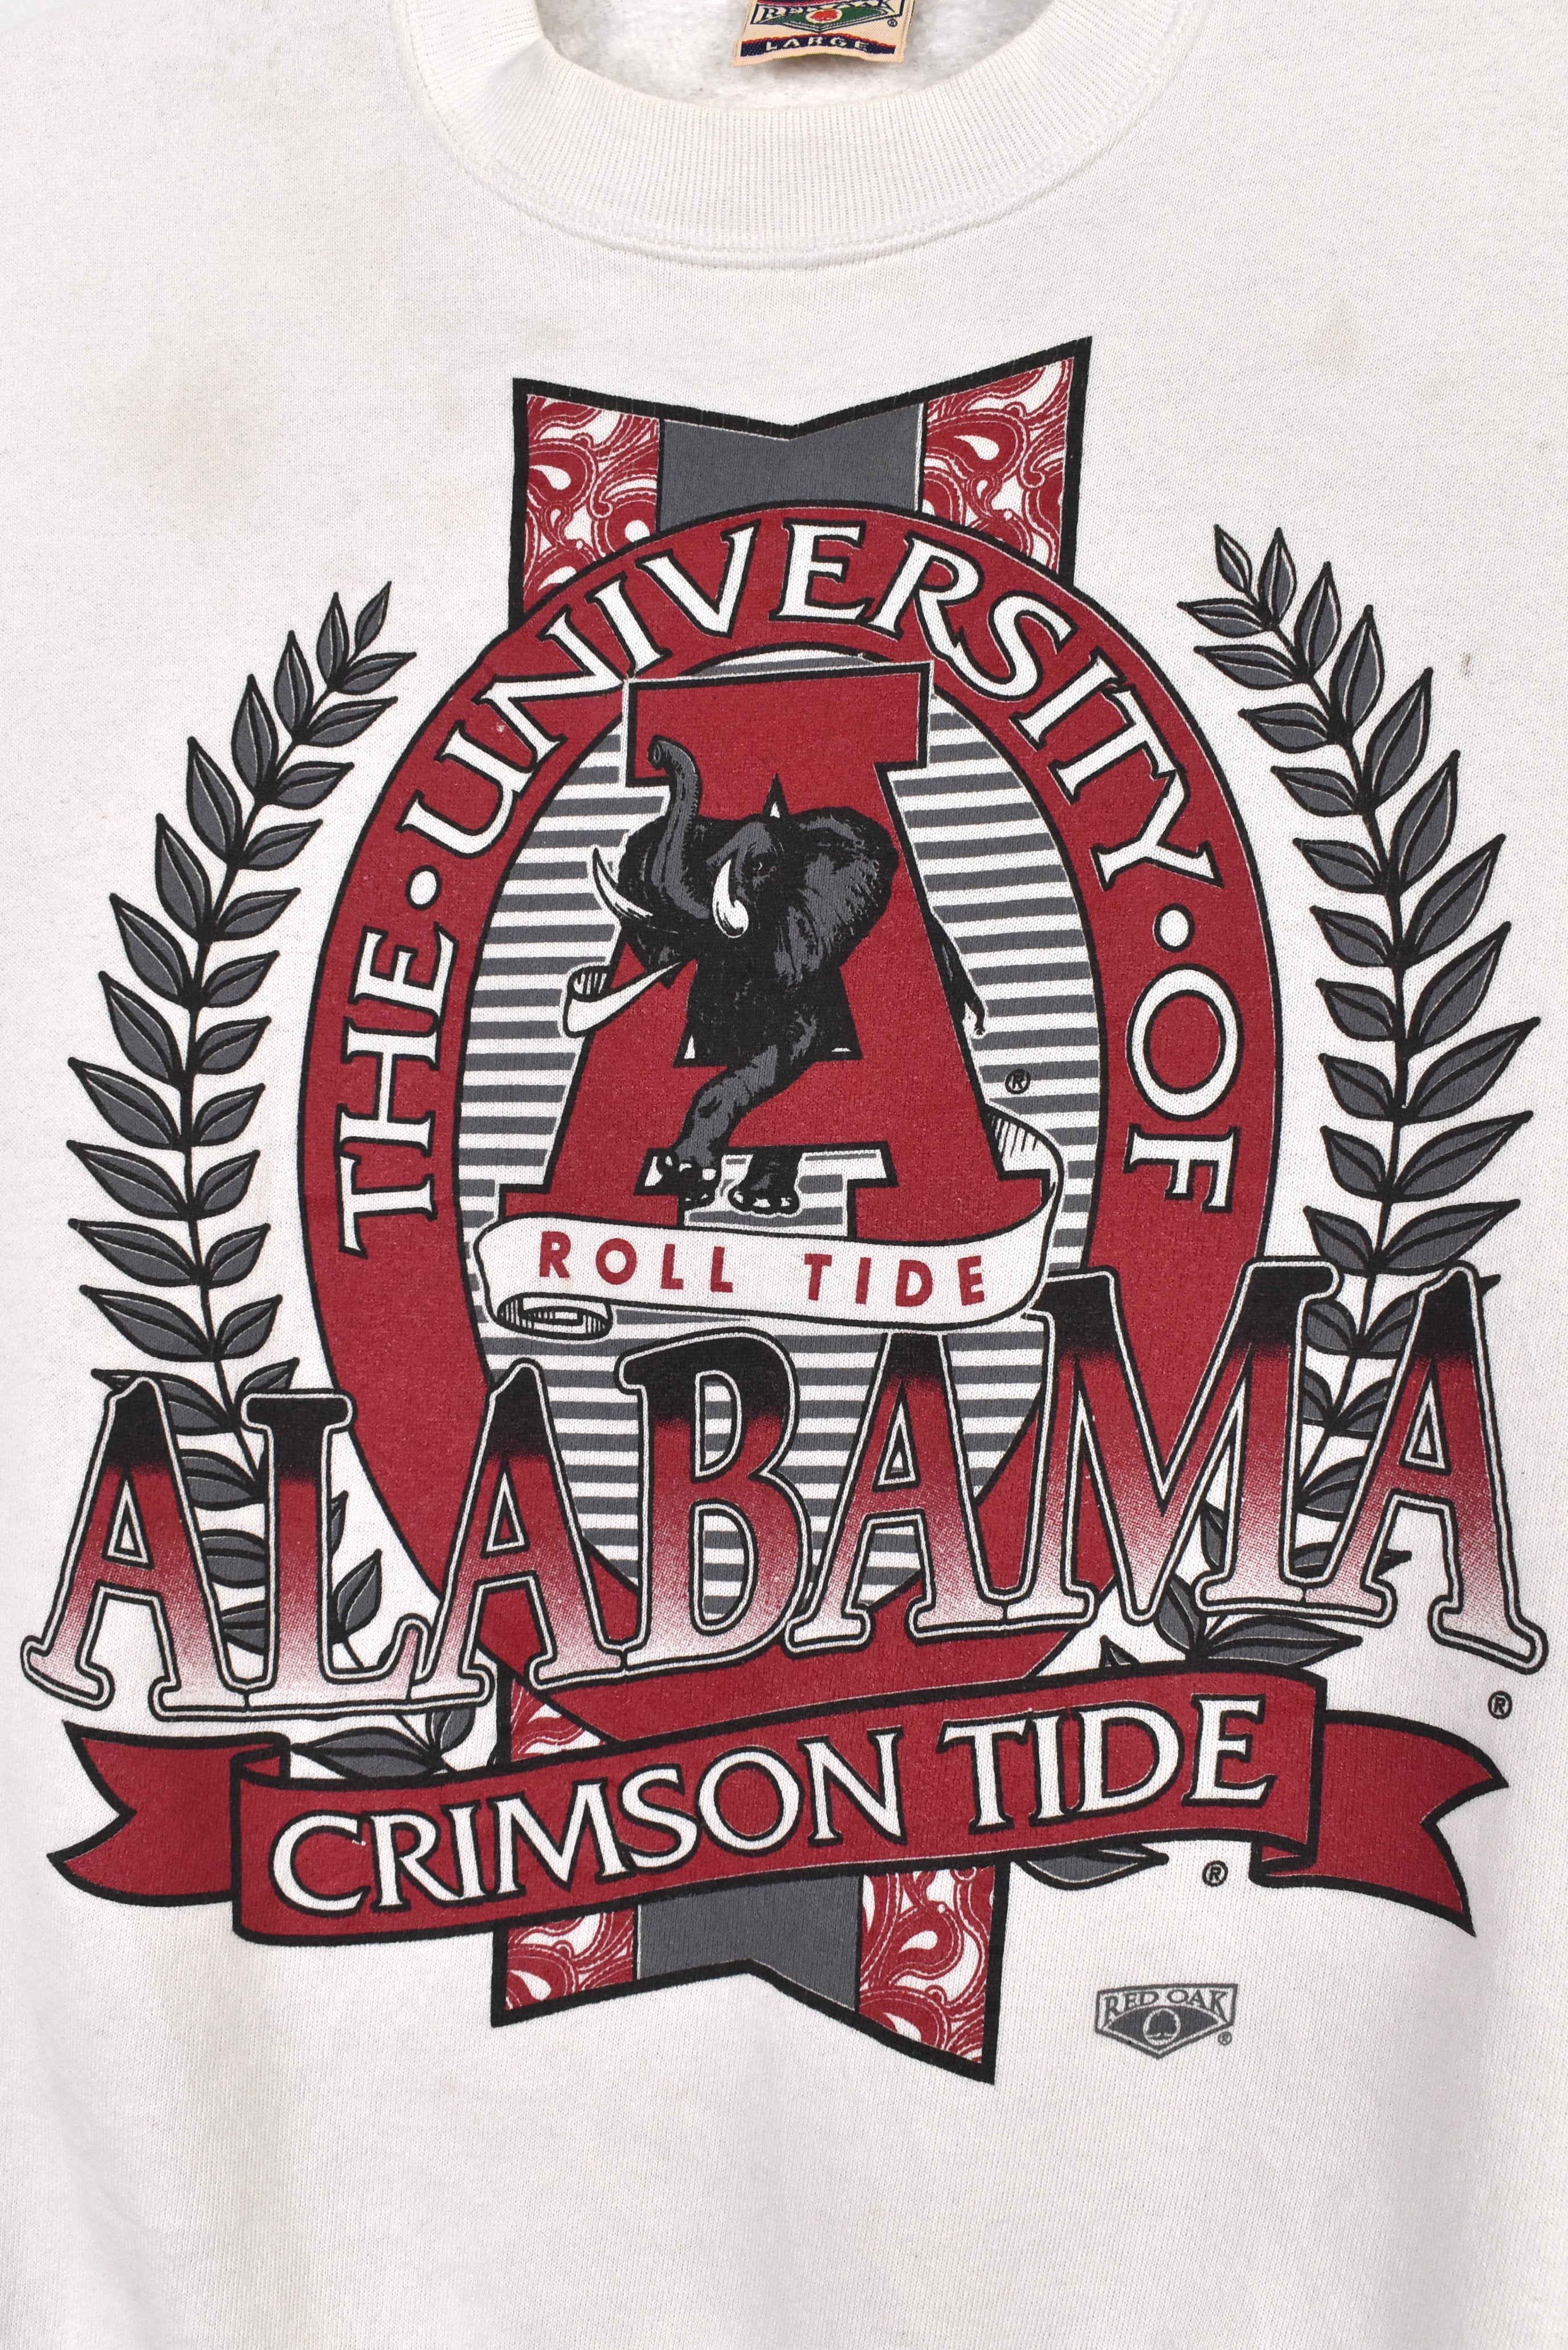 Vintage University of Alabama sweatshirt, white graphic crewneck - Medium